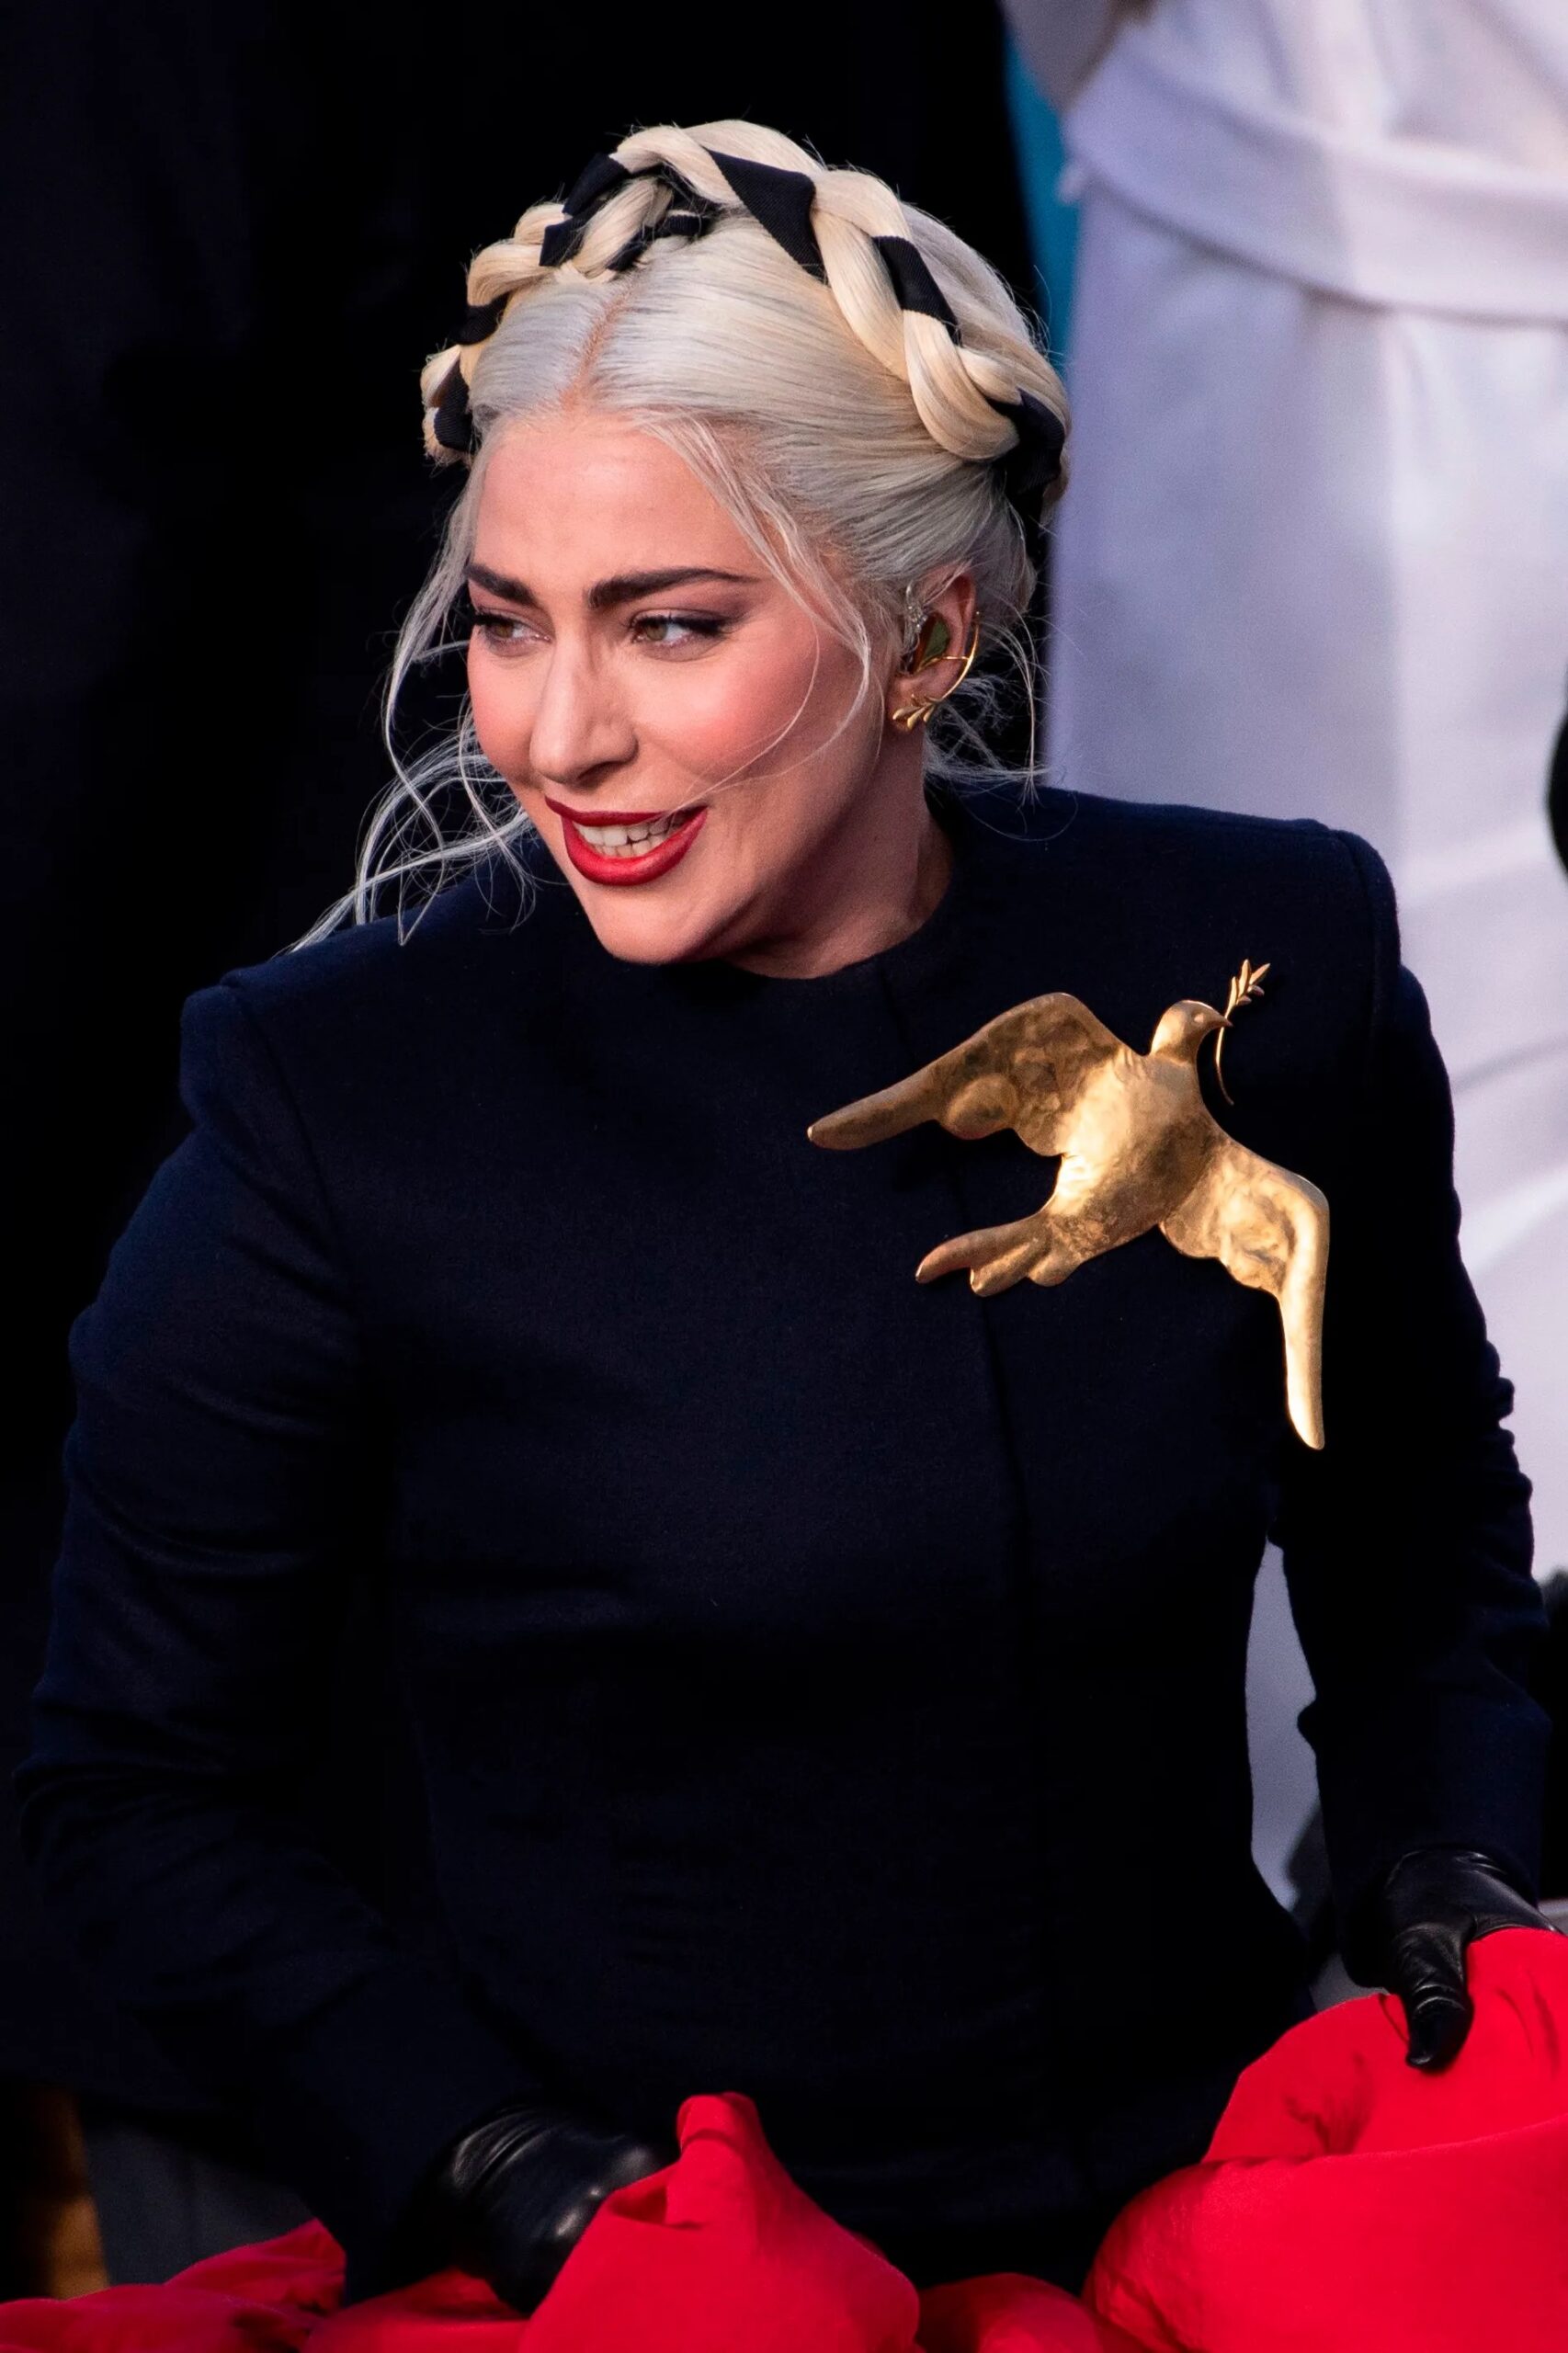 Caroline Brehman Image of Lady Gaga at Biden Inauguration wearing Schiaparelli Brooch designed by creative director Daniel Roseberry